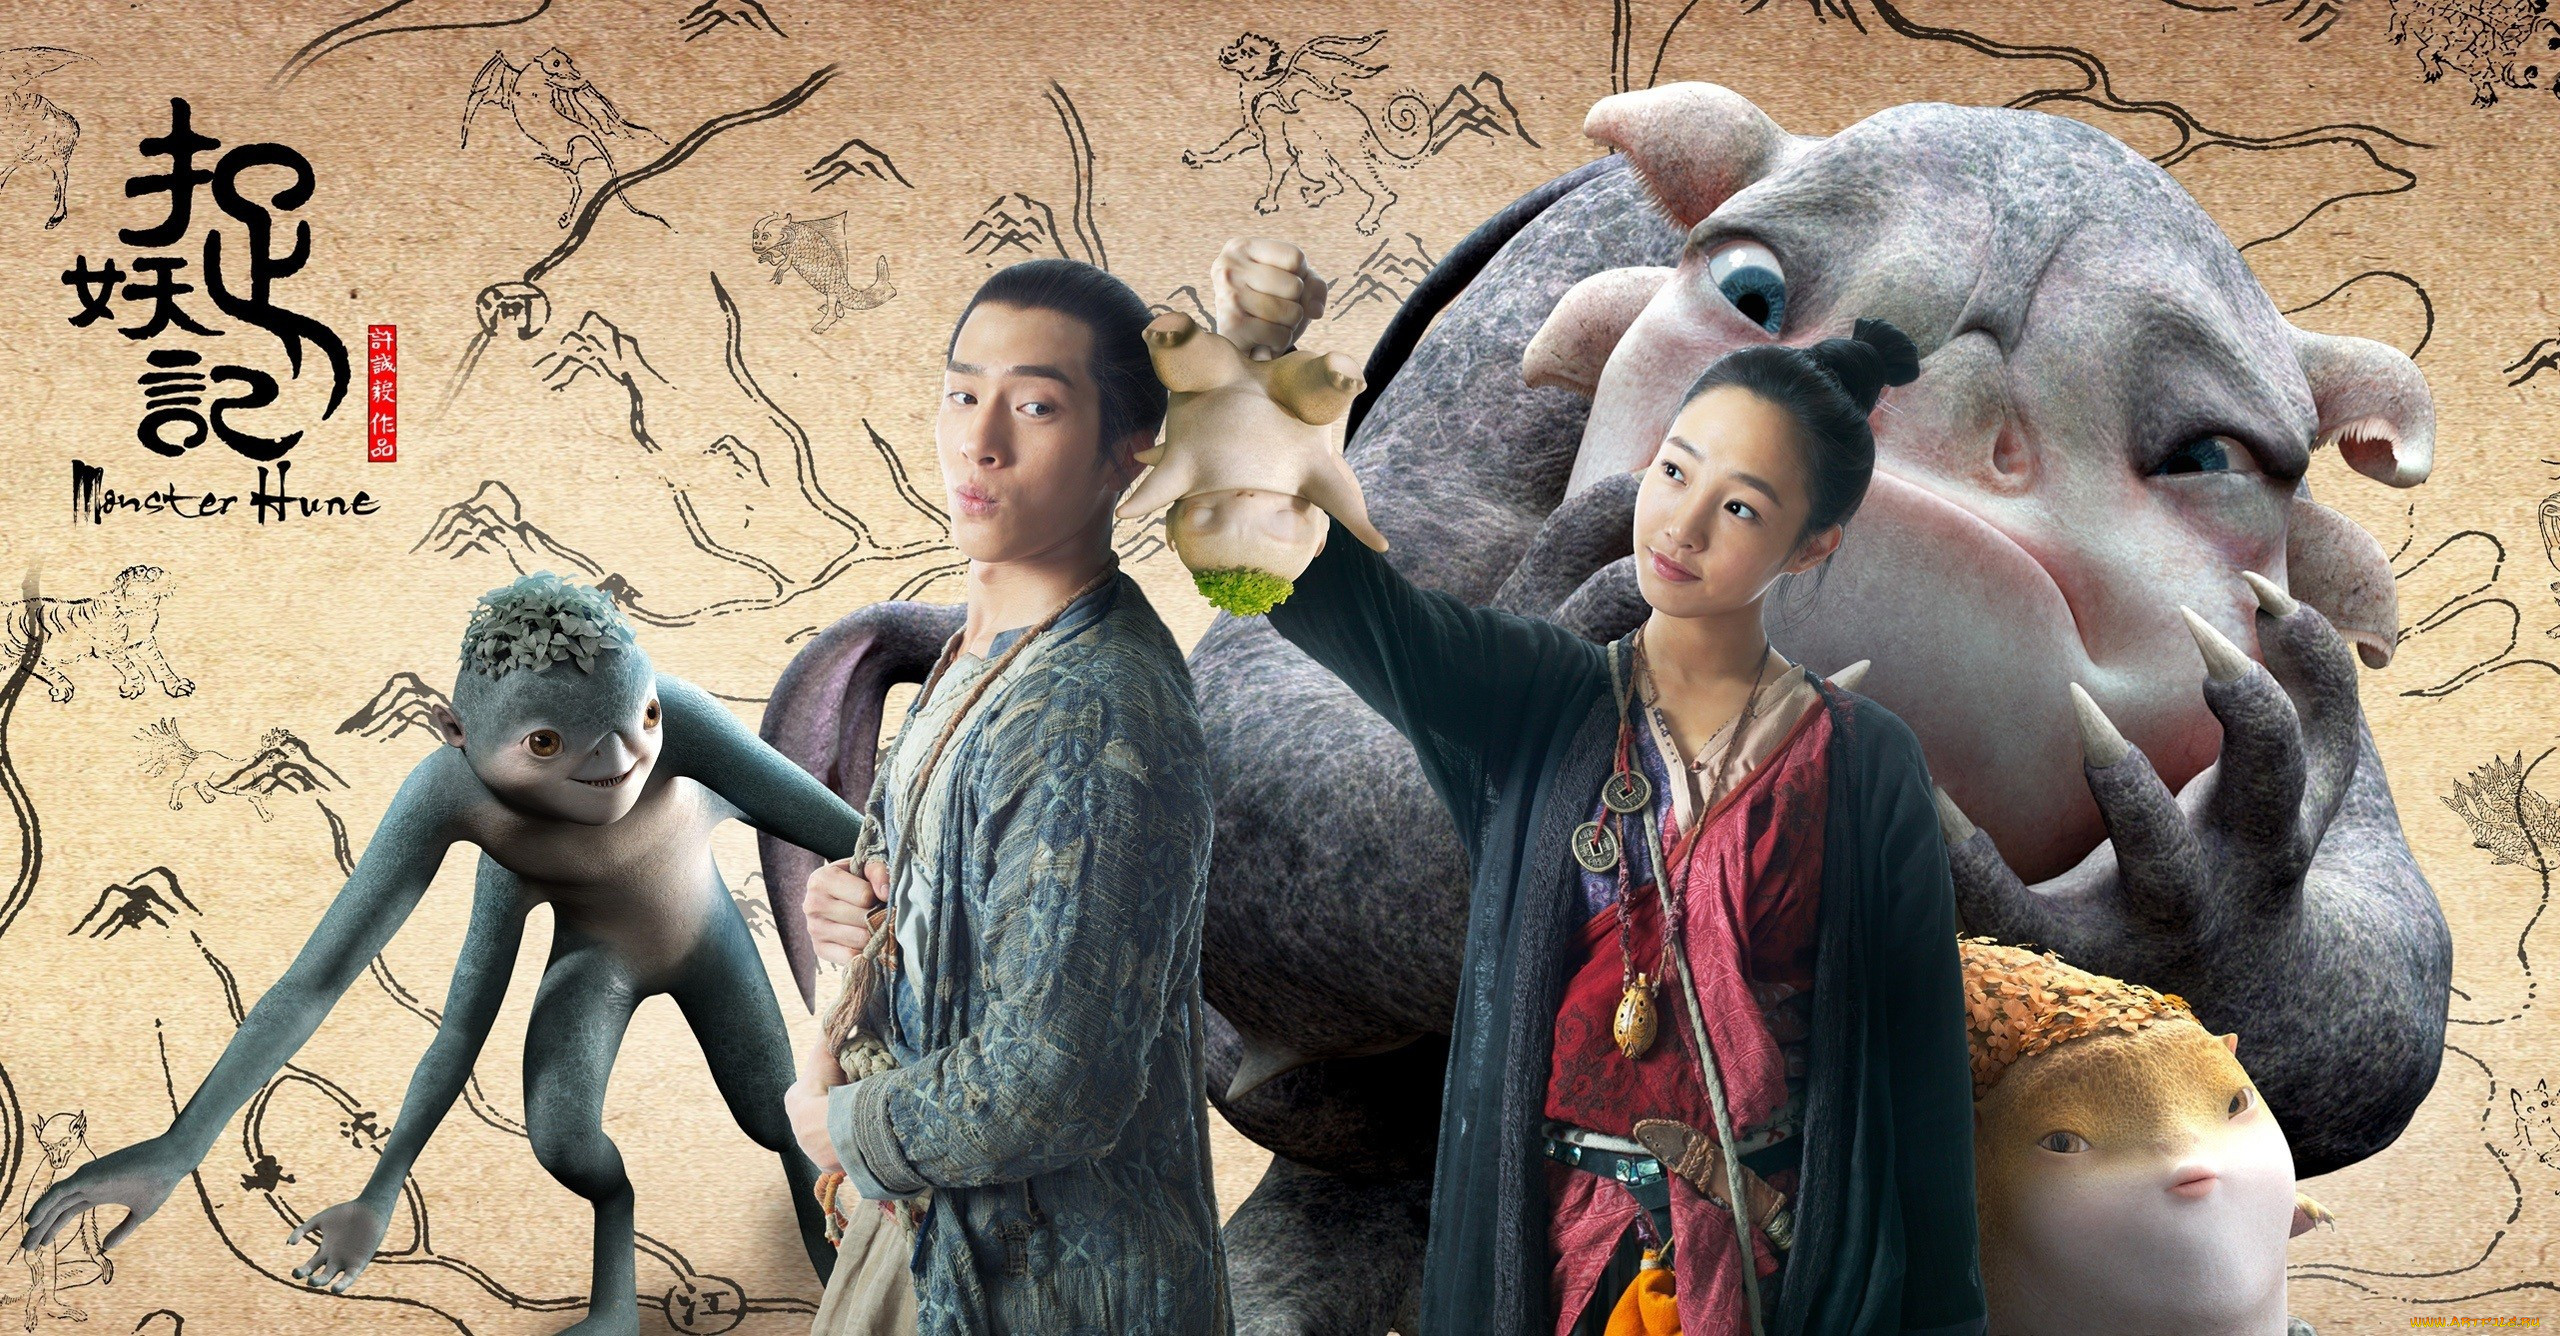  , zhuo yao ji, chinese, girl, oriental, monster, hunt, asiatic, film, movie, adventure, fantasy, asian, cinema, man